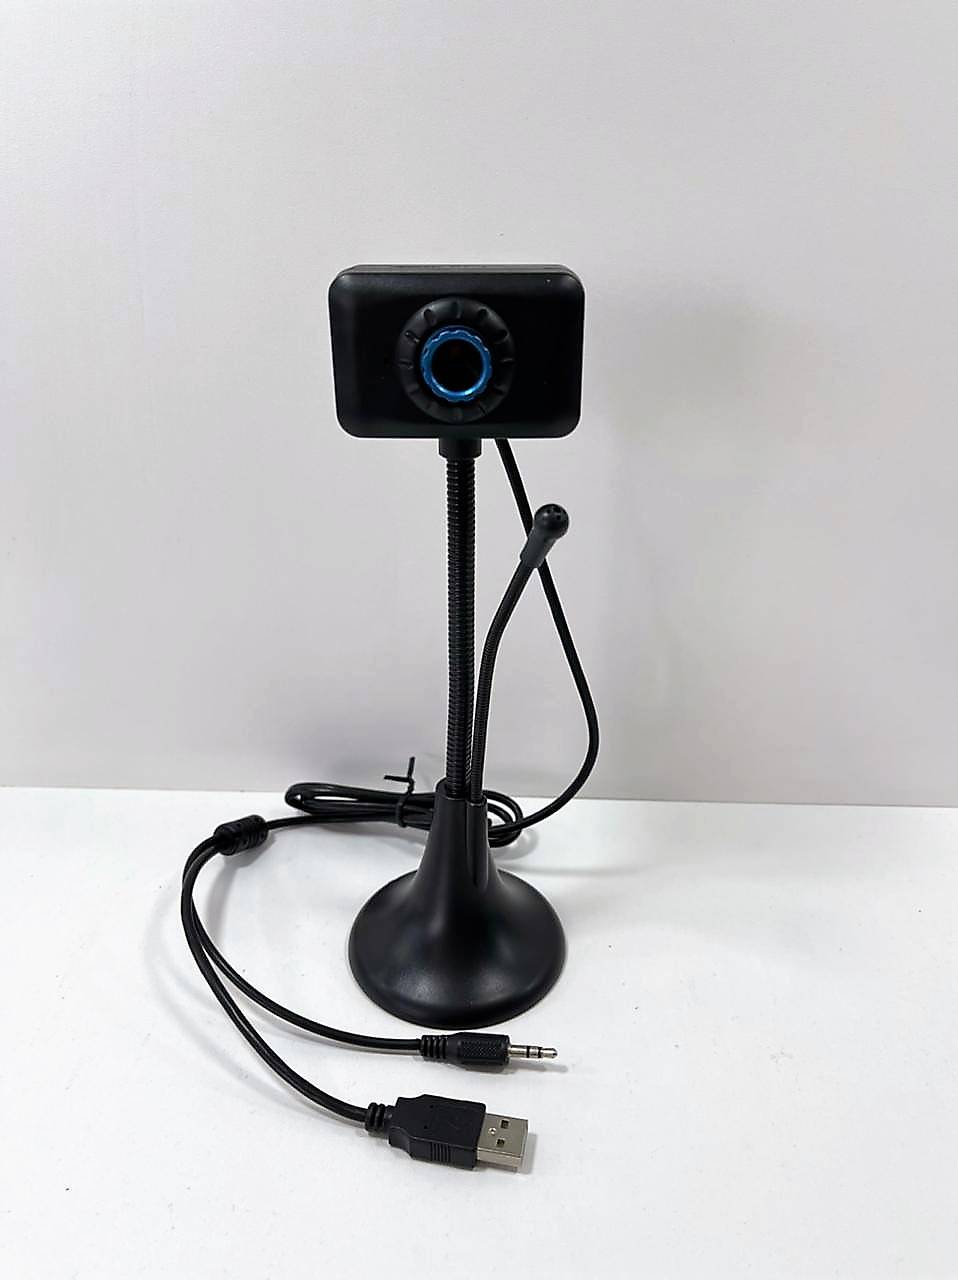 camara-web-usb-con-pedestal-microfono-480p-idkmanager-2.jpeg